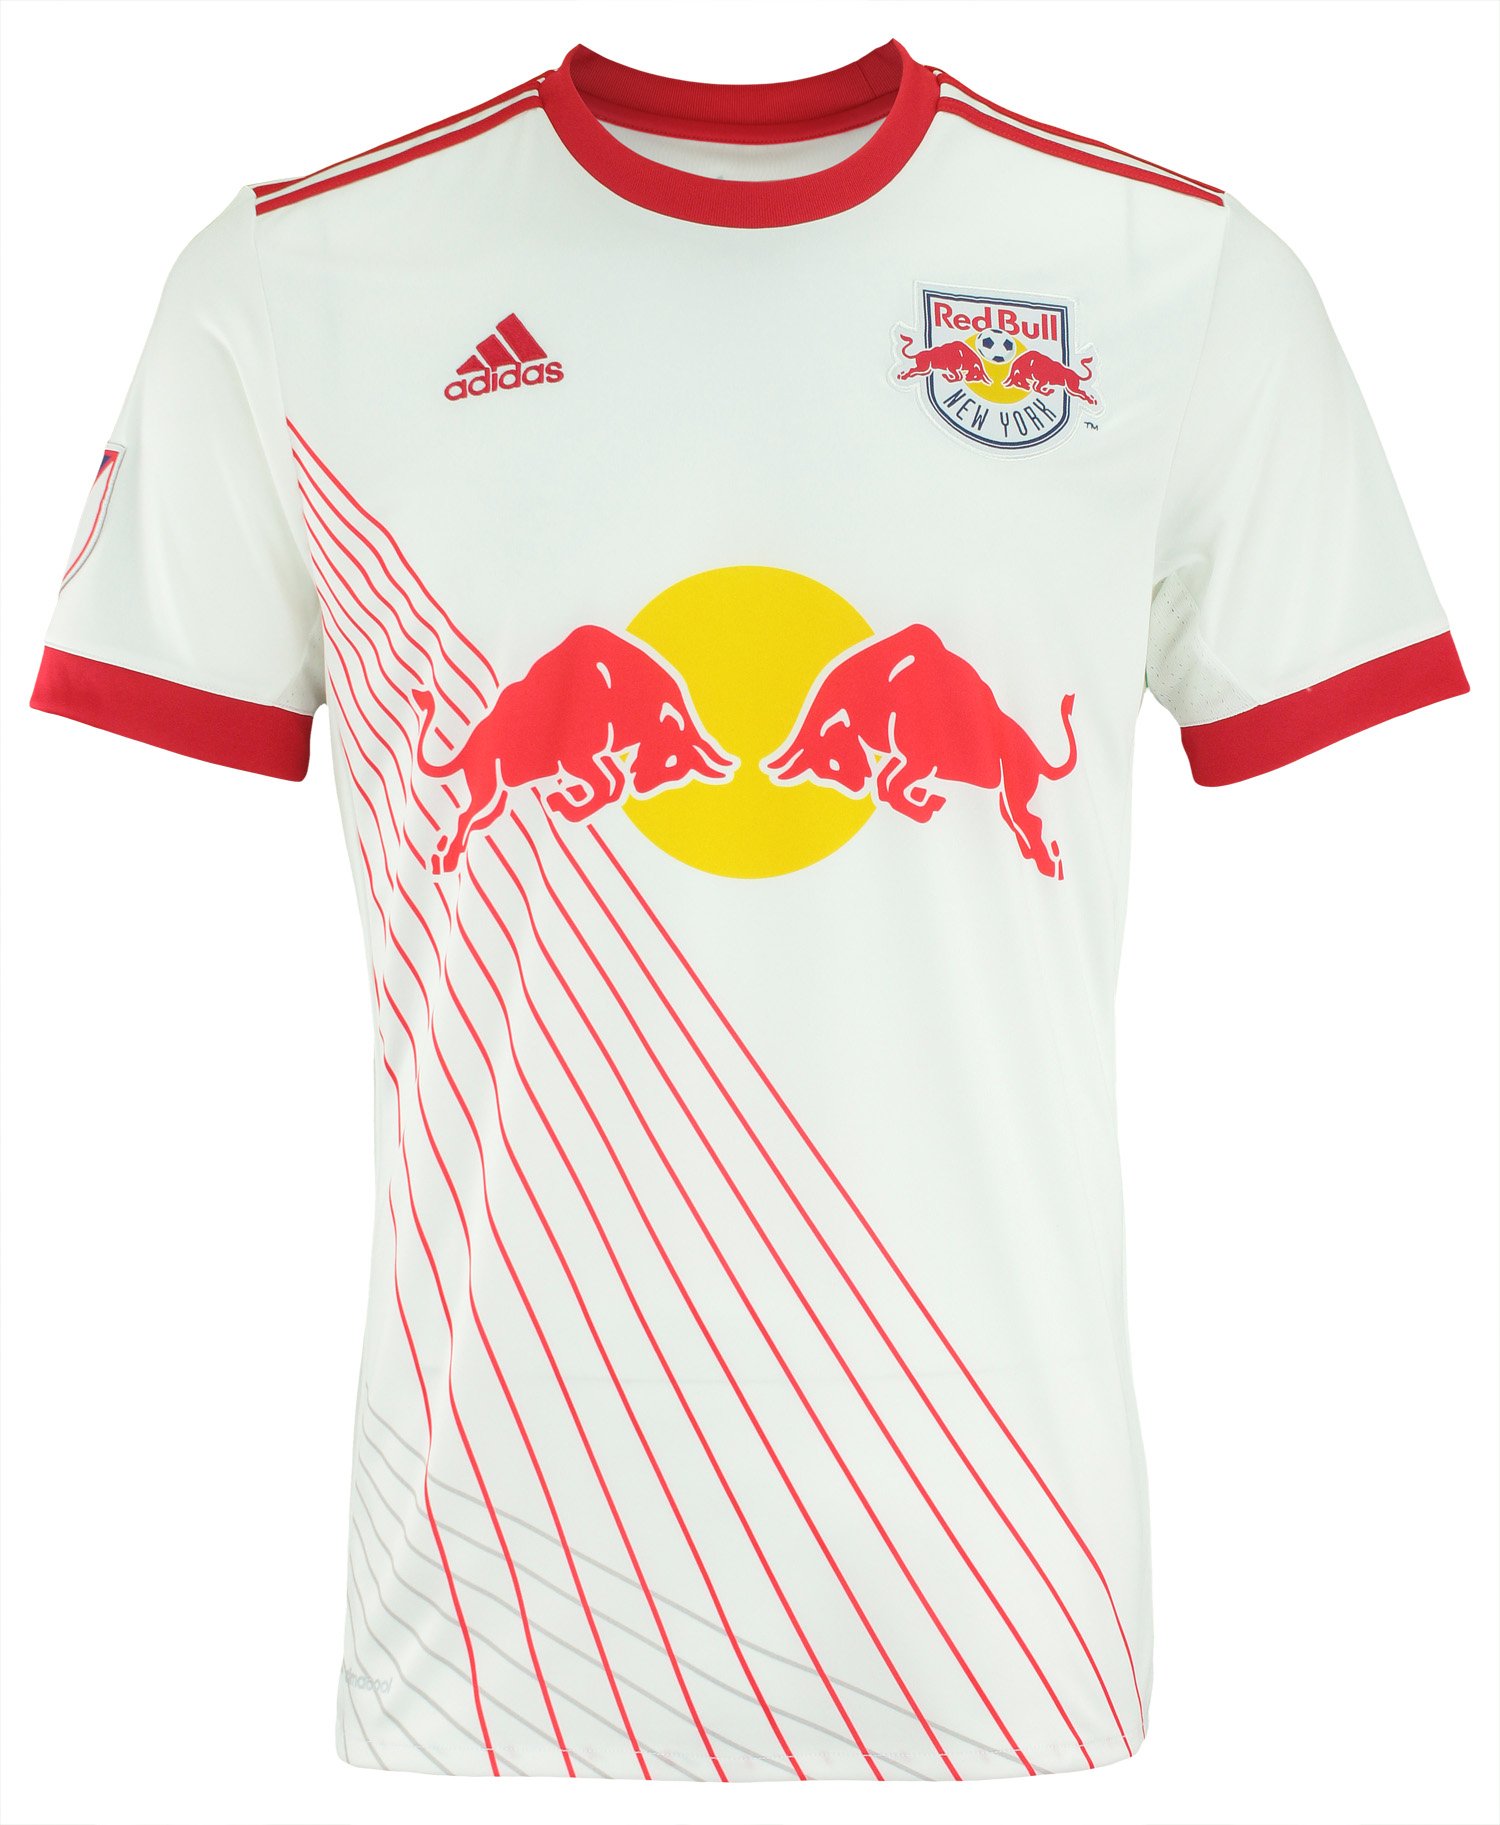 Adidas Soccer MLS Men's New York Red Bull Short Sleeve Team Jersey - image 1 of 1